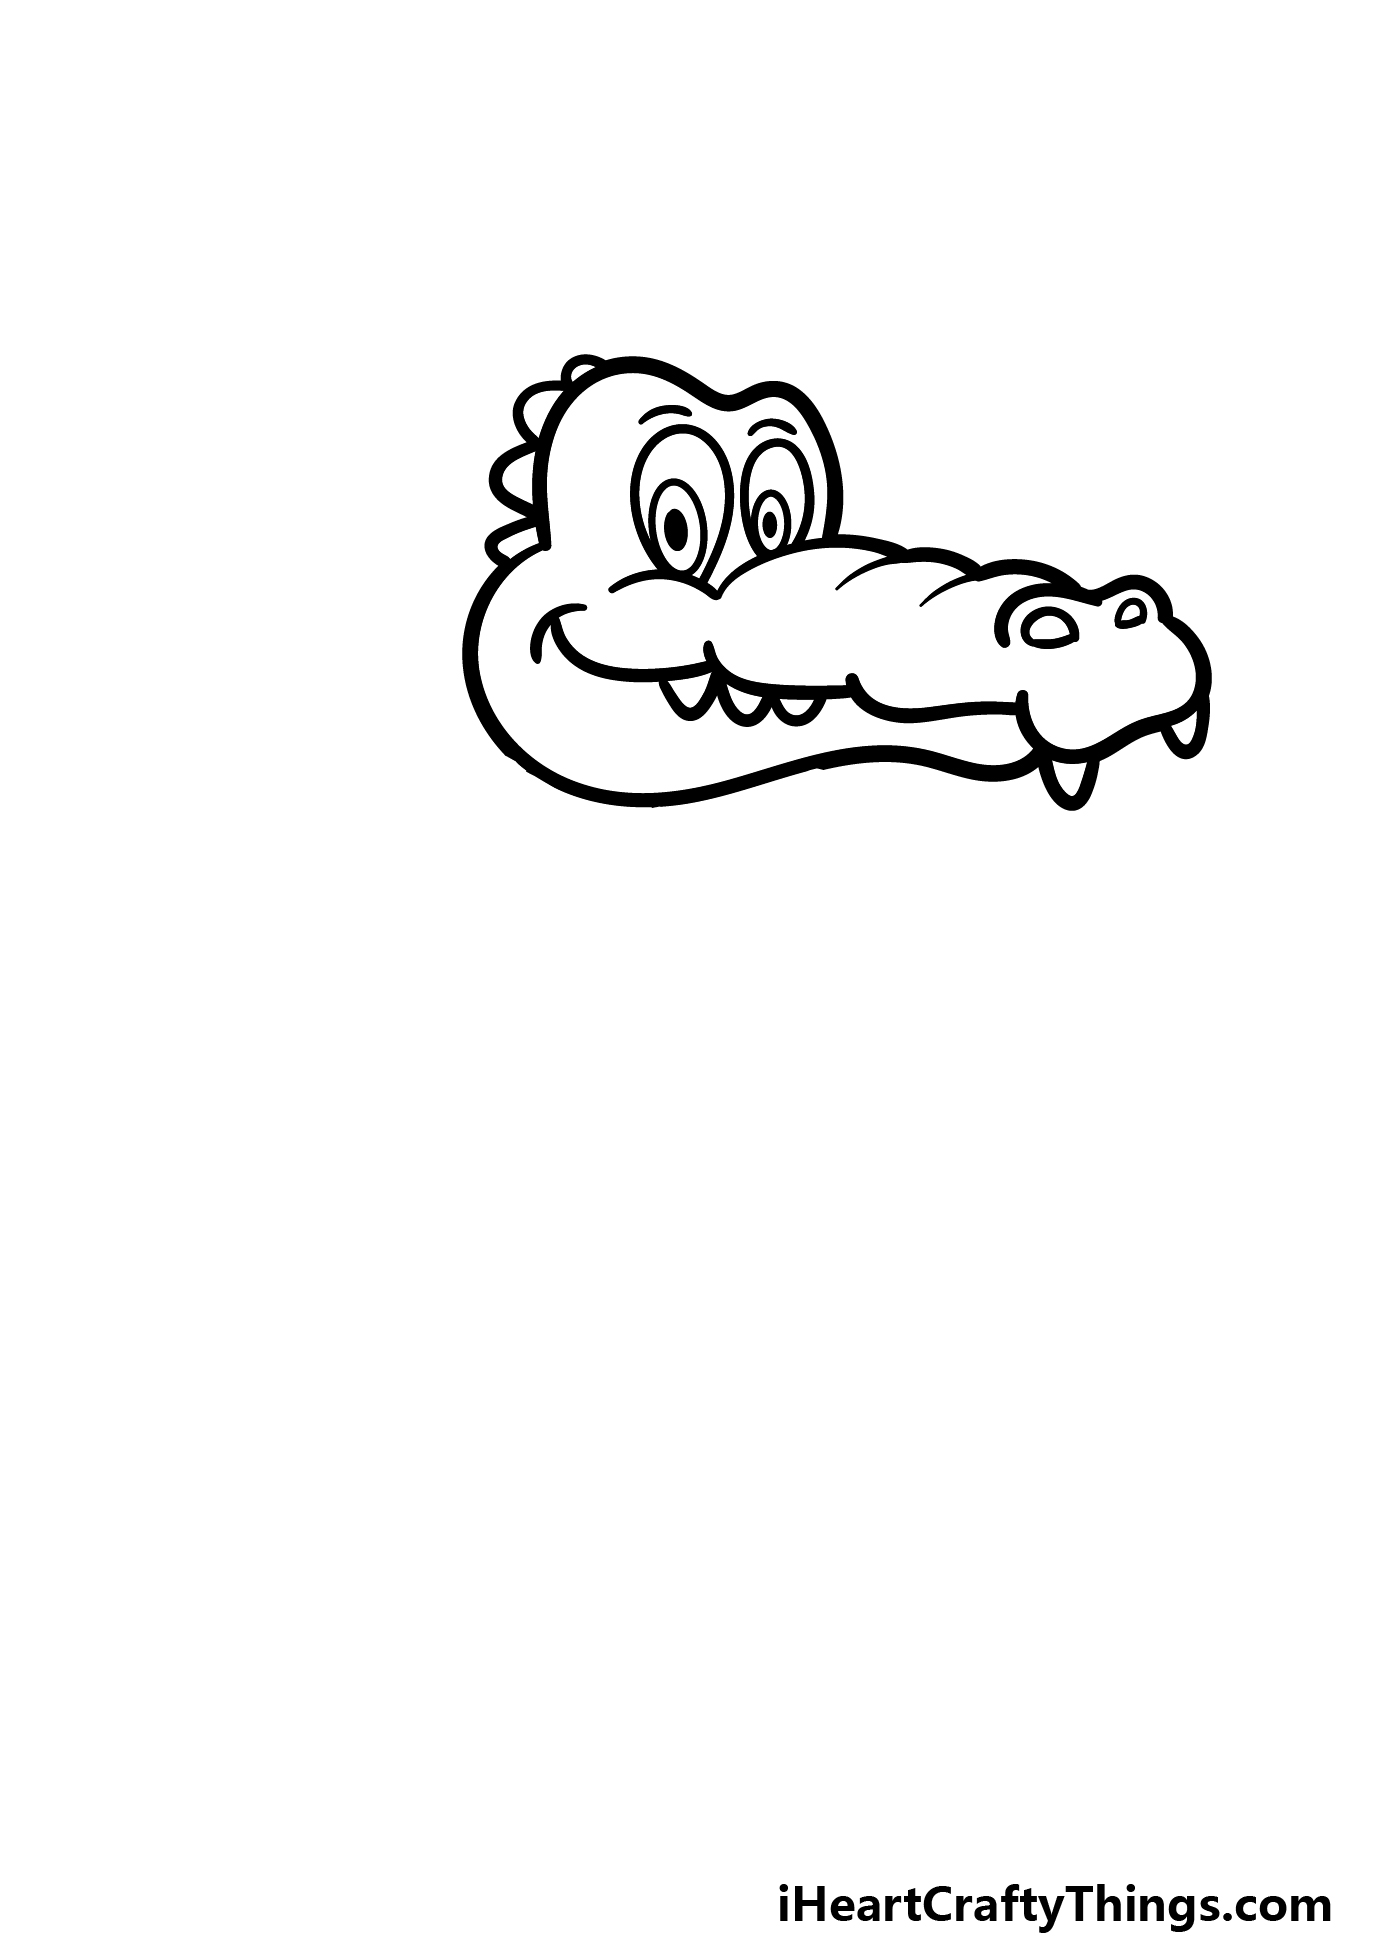 Cartoon Alligator Drawing - How To Draw A Cartoon Alligator Step By Step!